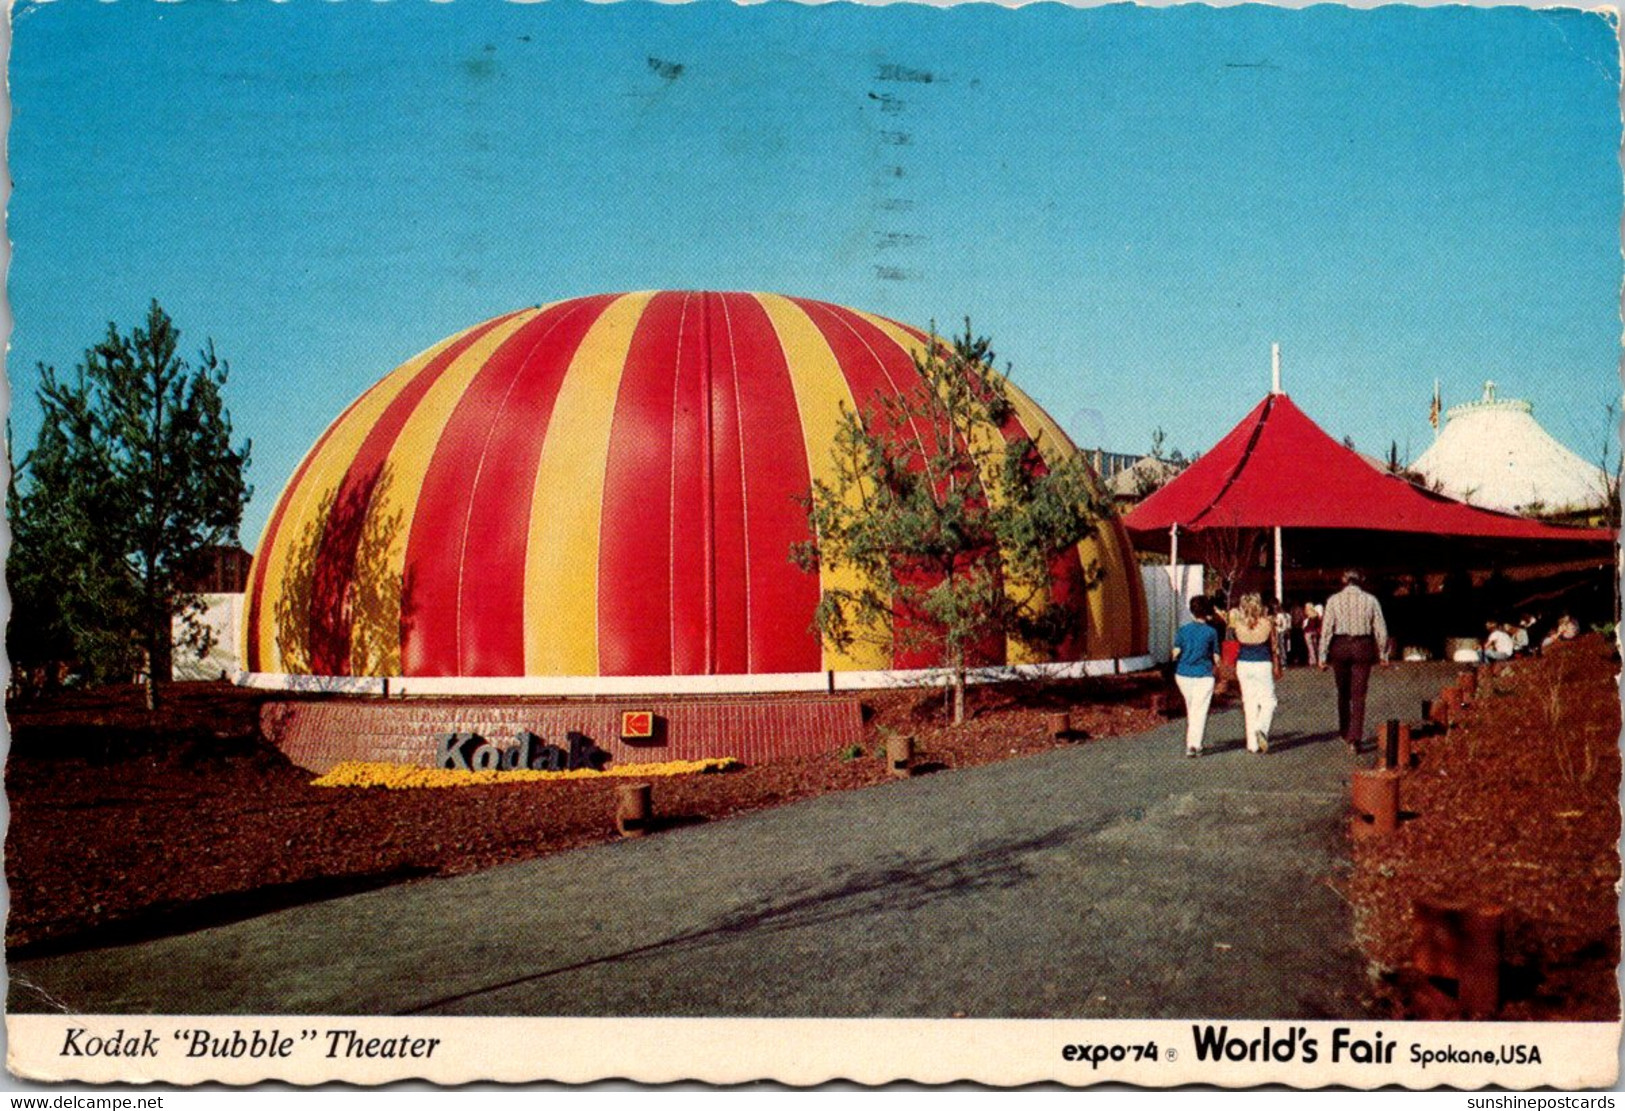 Washington Spokane Expo '74 World's Fair Kodak "Bubble Theater" 1974 - Spokane